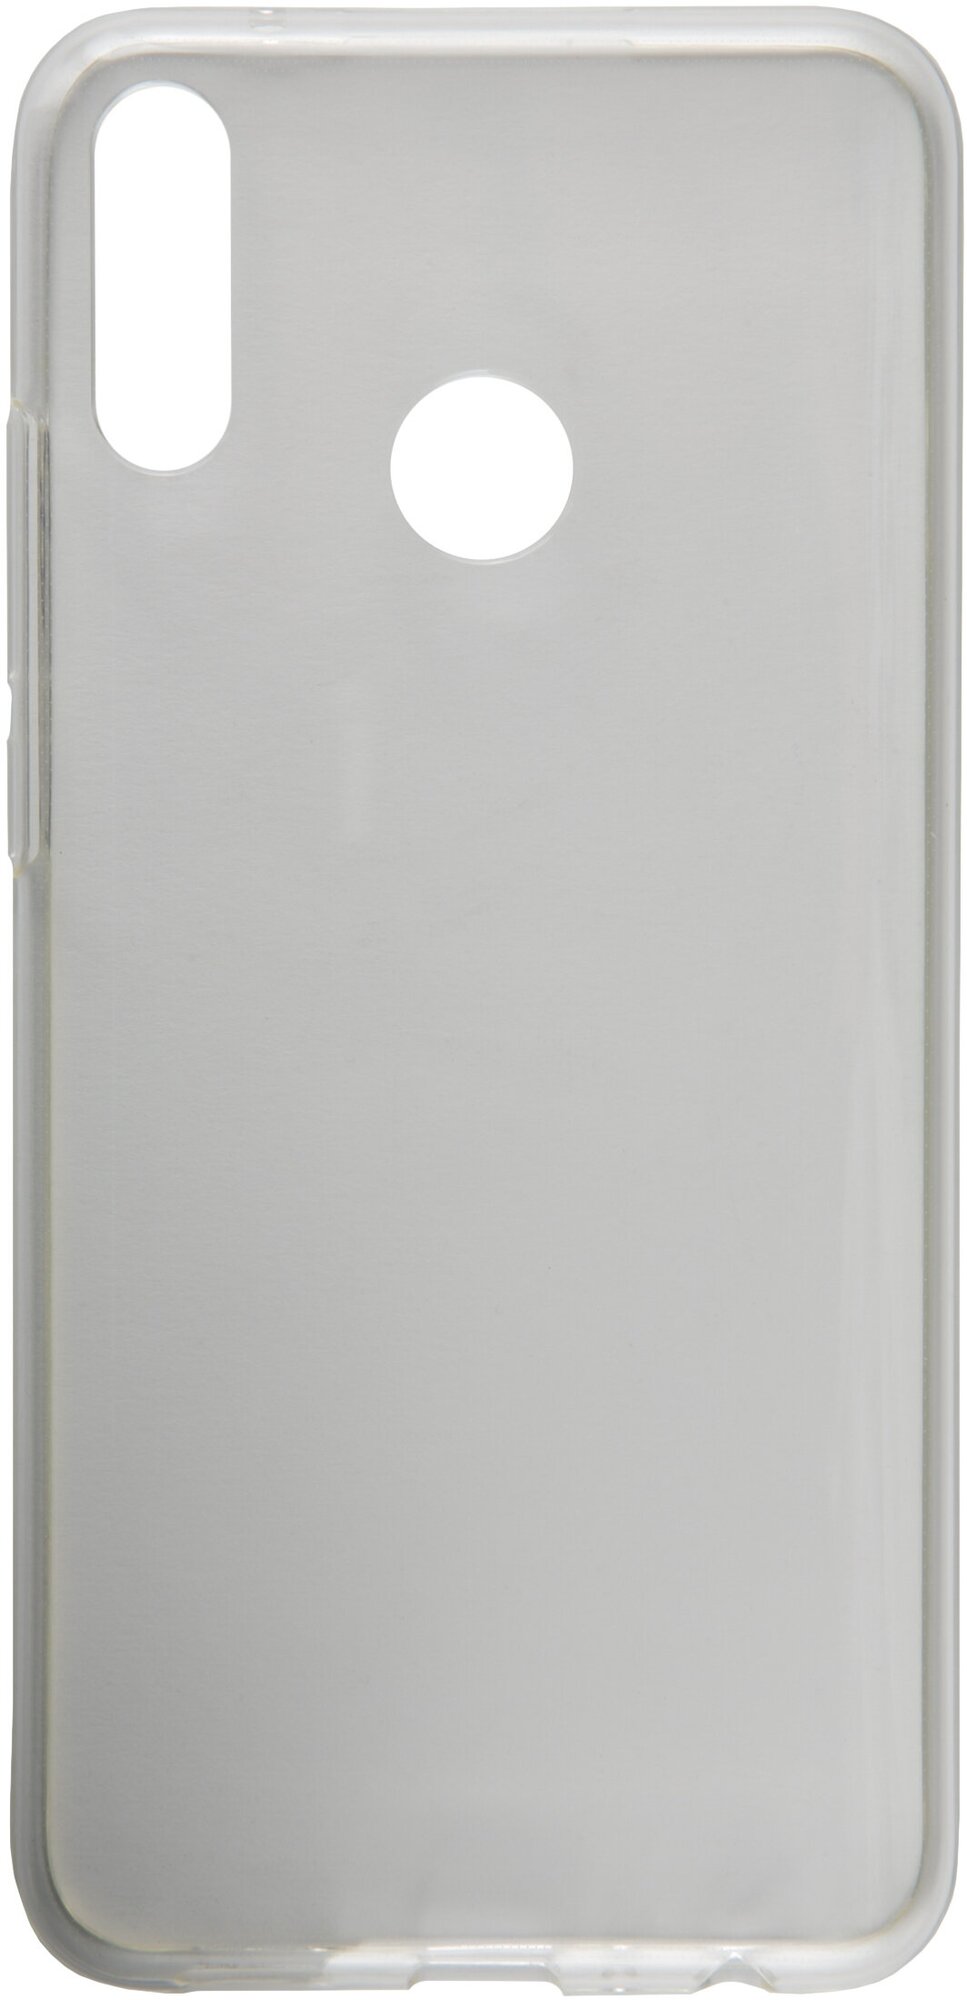 Накладка на смартфон Huawei Y9 2019/Силиконовый чехол/Бампер на Хуавей Вай9 2019/Защита от царапин/Case/Чехол накладка прозрачный